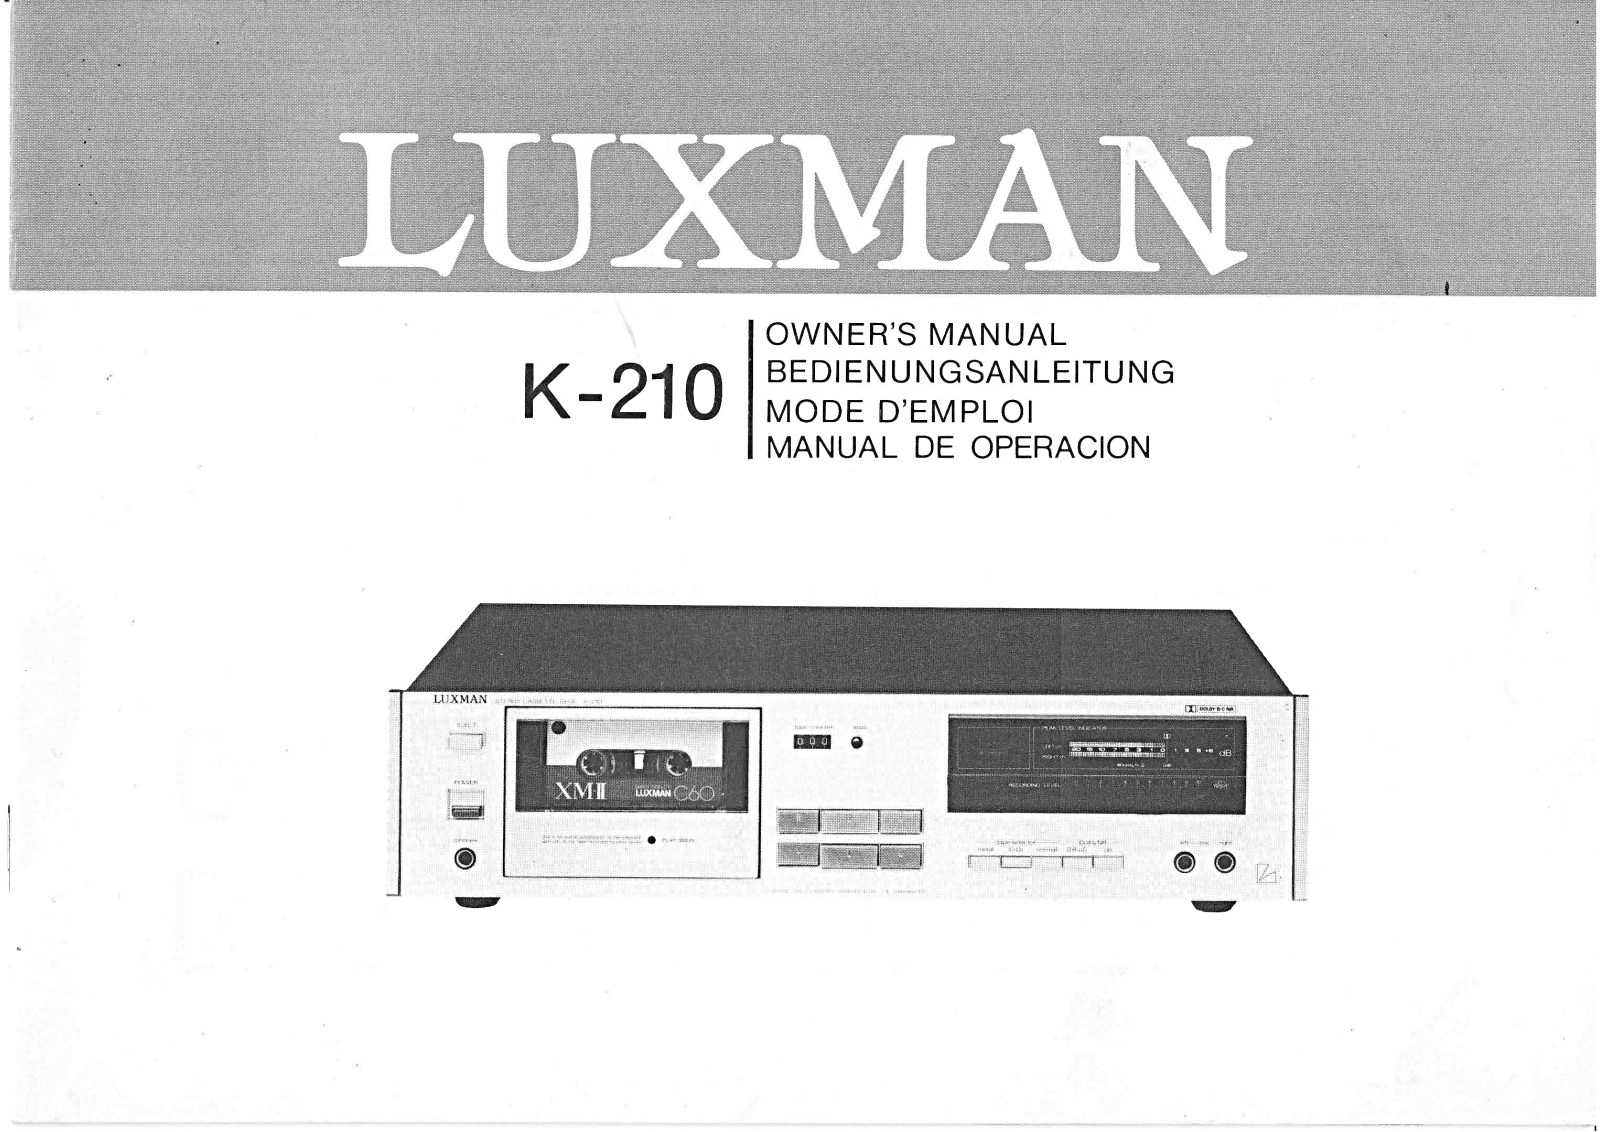 Luxman K-210 Owners Manual